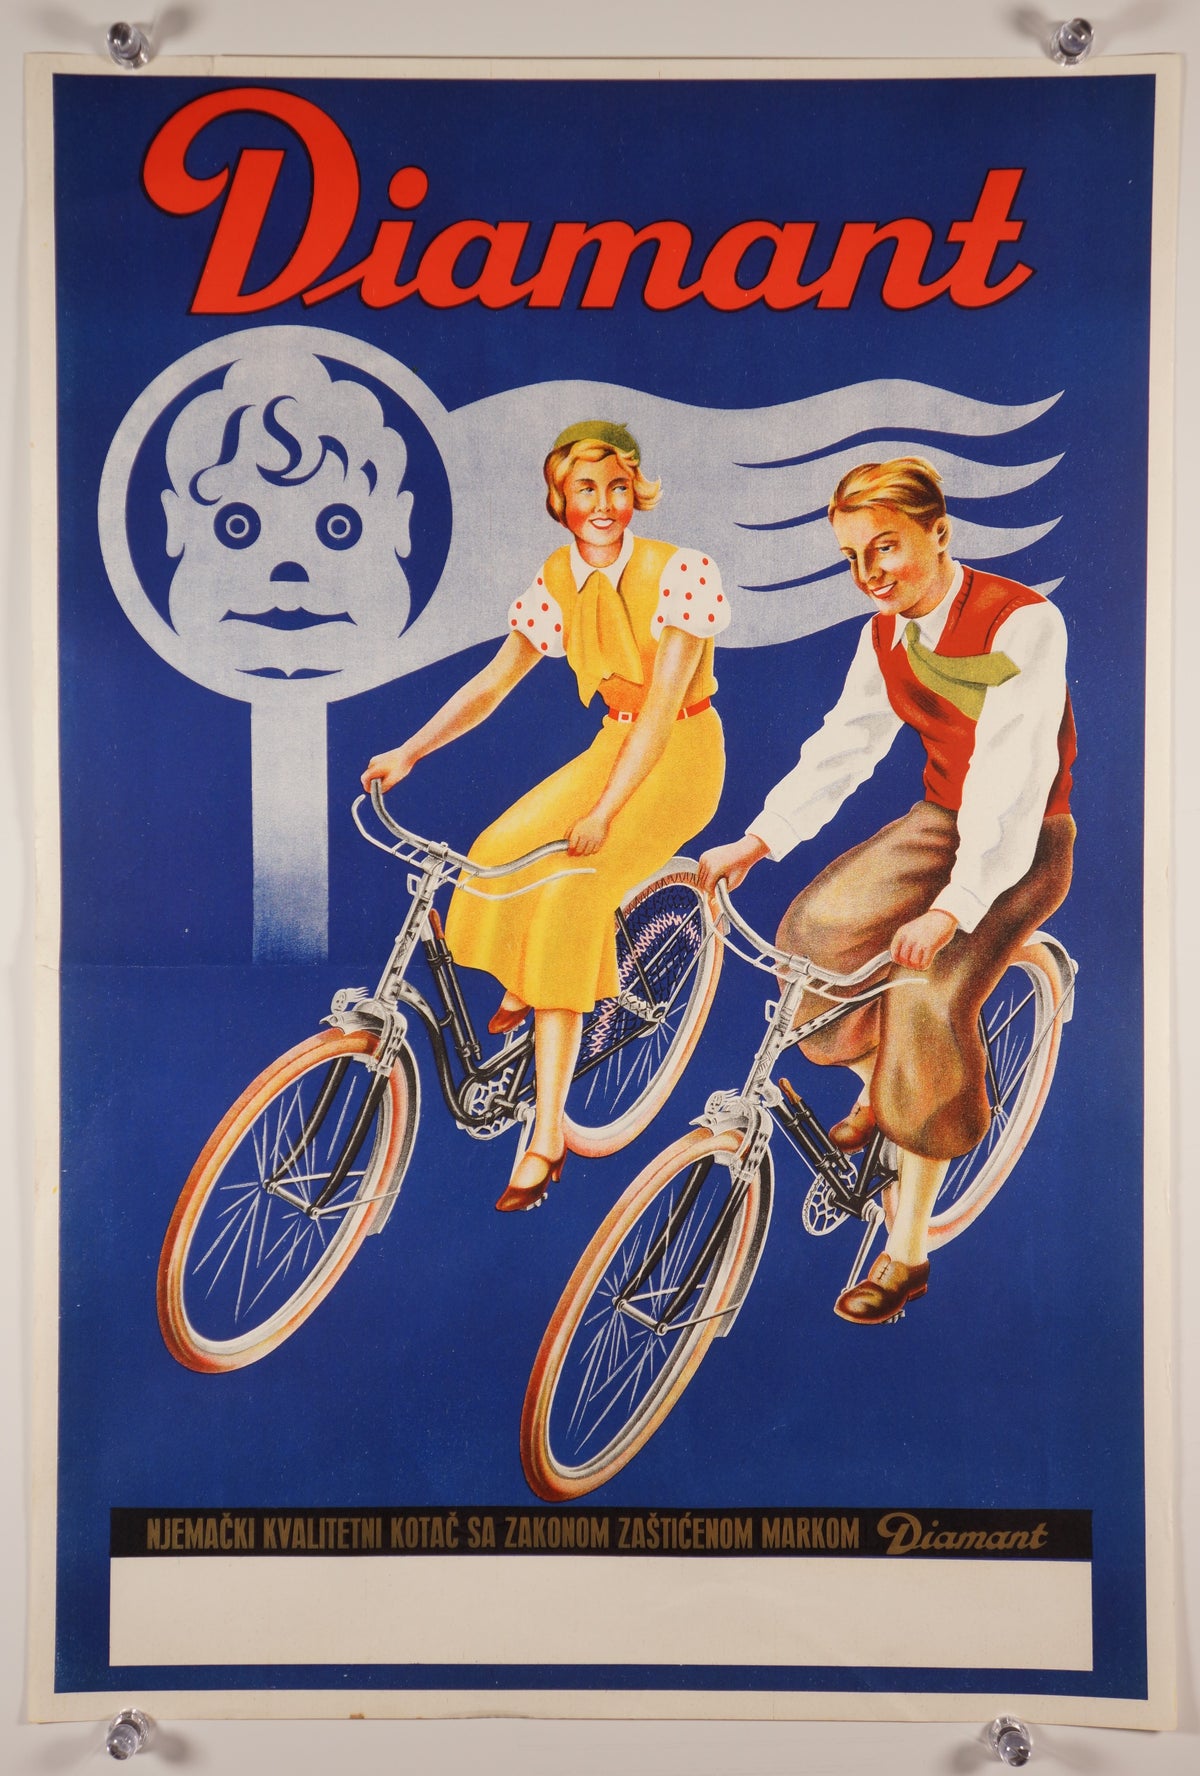 Diamant Bicycle - Authentic Vintage Poster